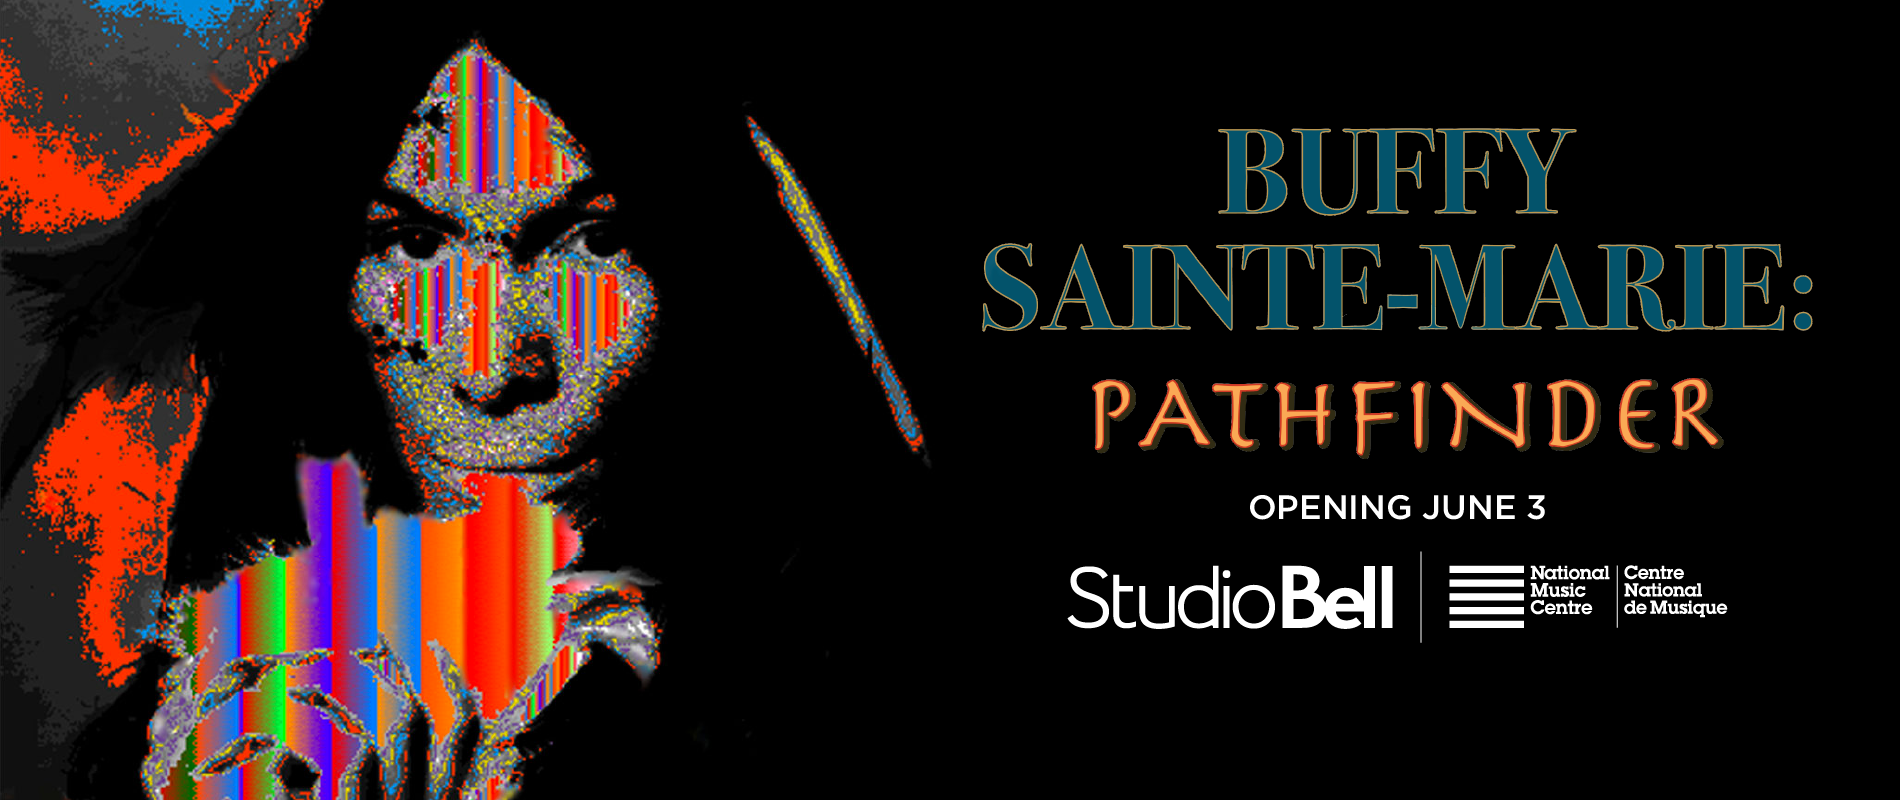 NMC Presents Buffy Sainte-Marie: Pathfinder Tickets